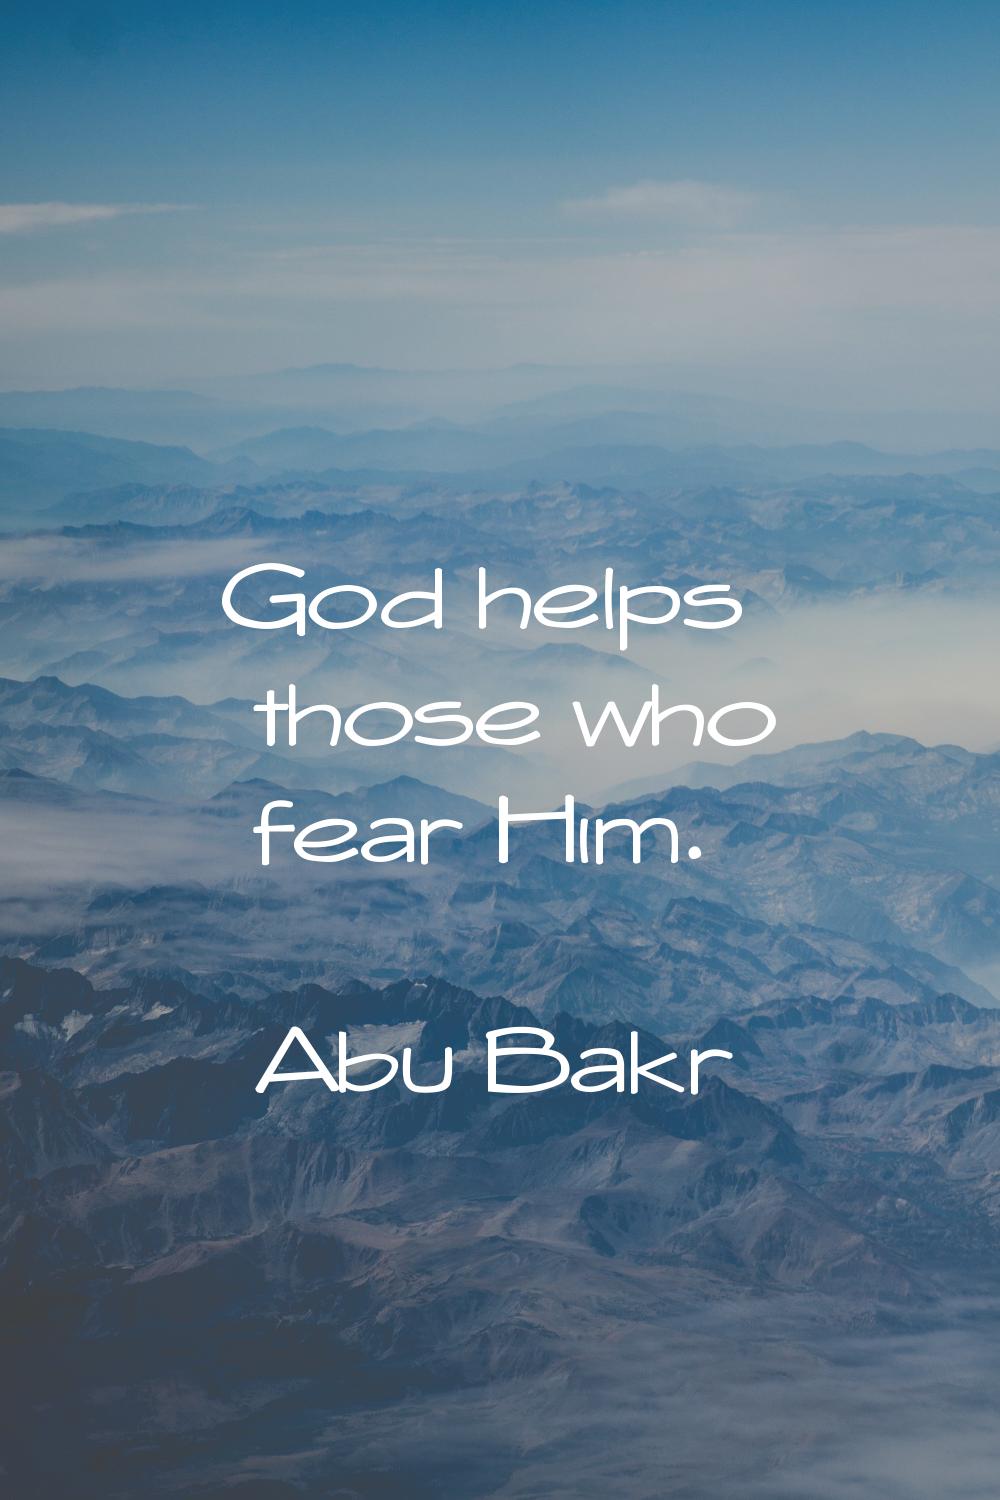 God helps those who fear Him.